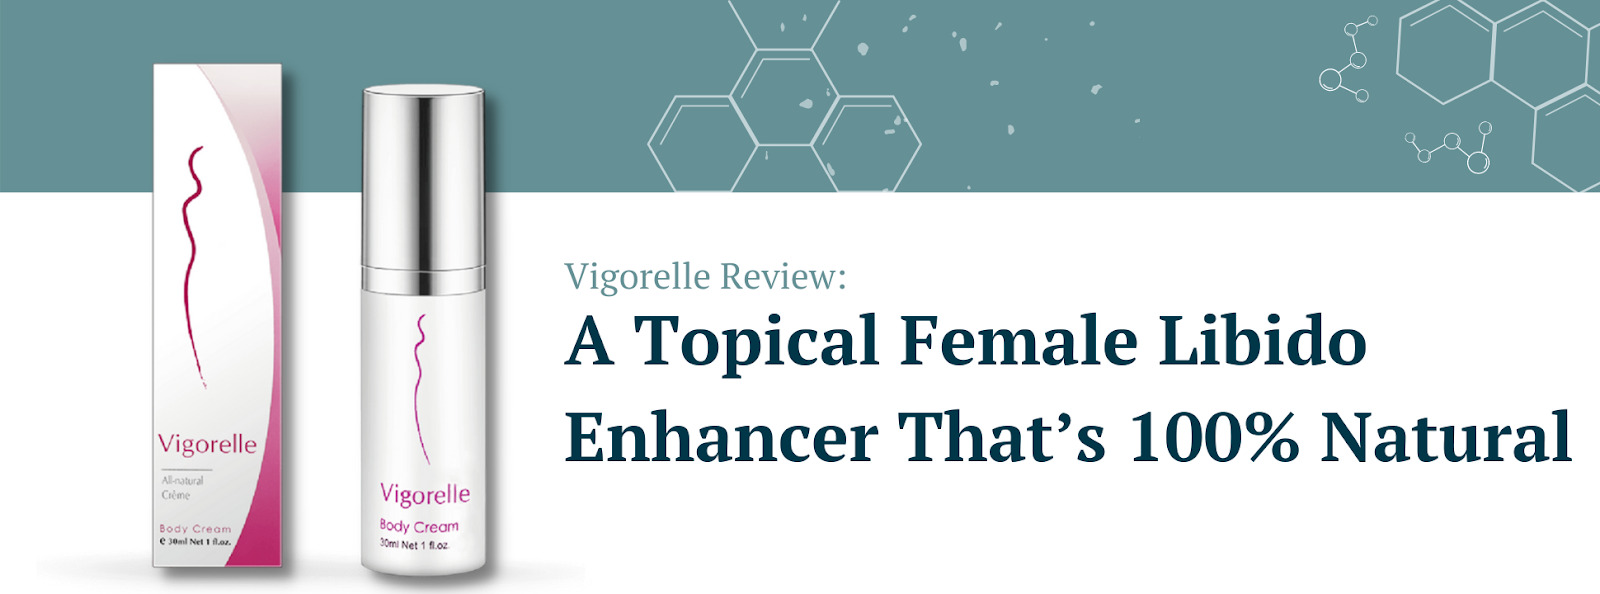 Vigorelle Review: A Topical Female Libido Enhancer That’s 100% Natural - Farr Institute